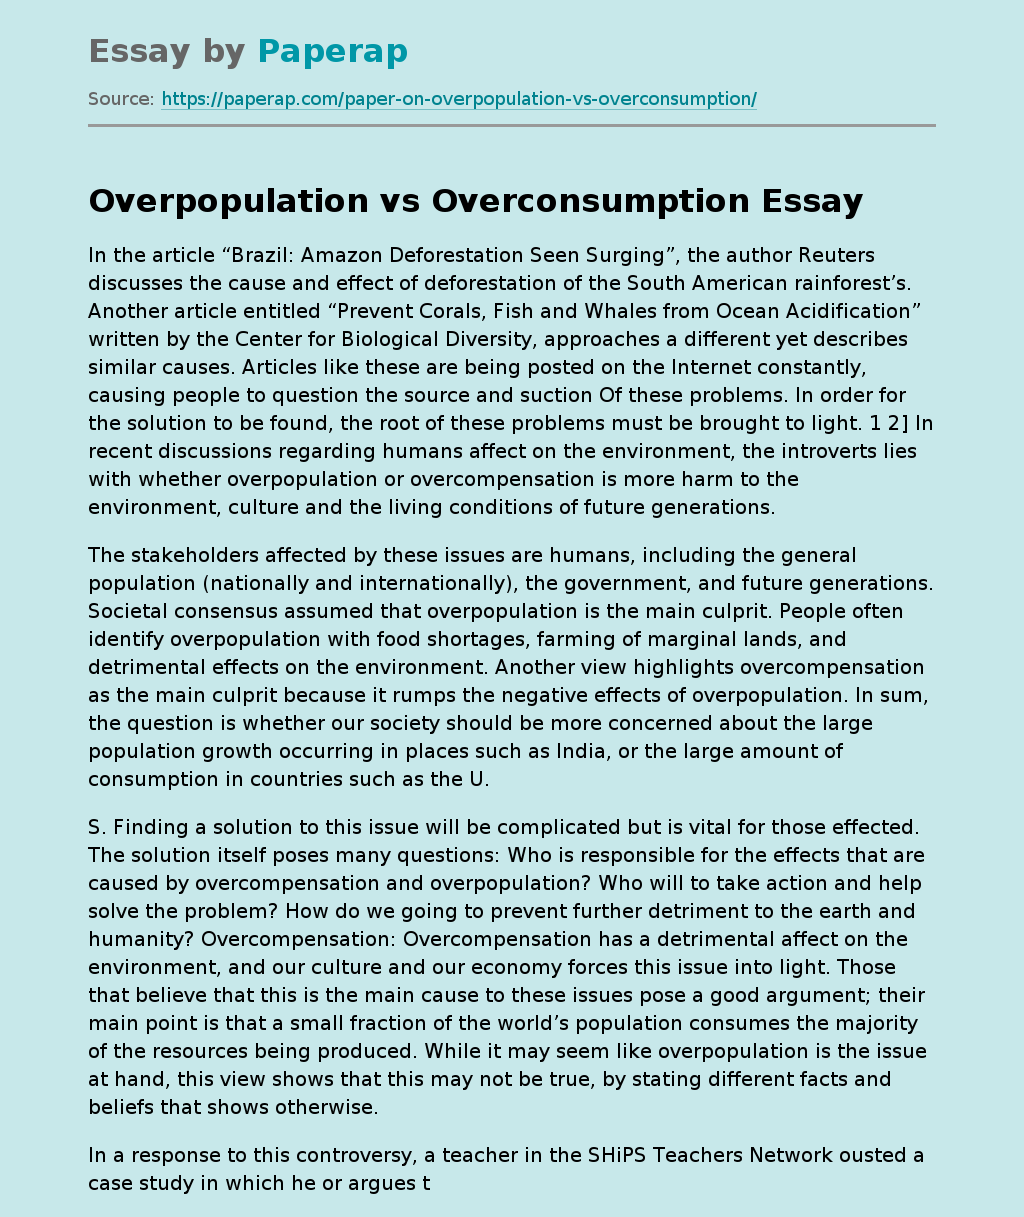 Overpopulation vs Overconsumption: Overcompensation Solution